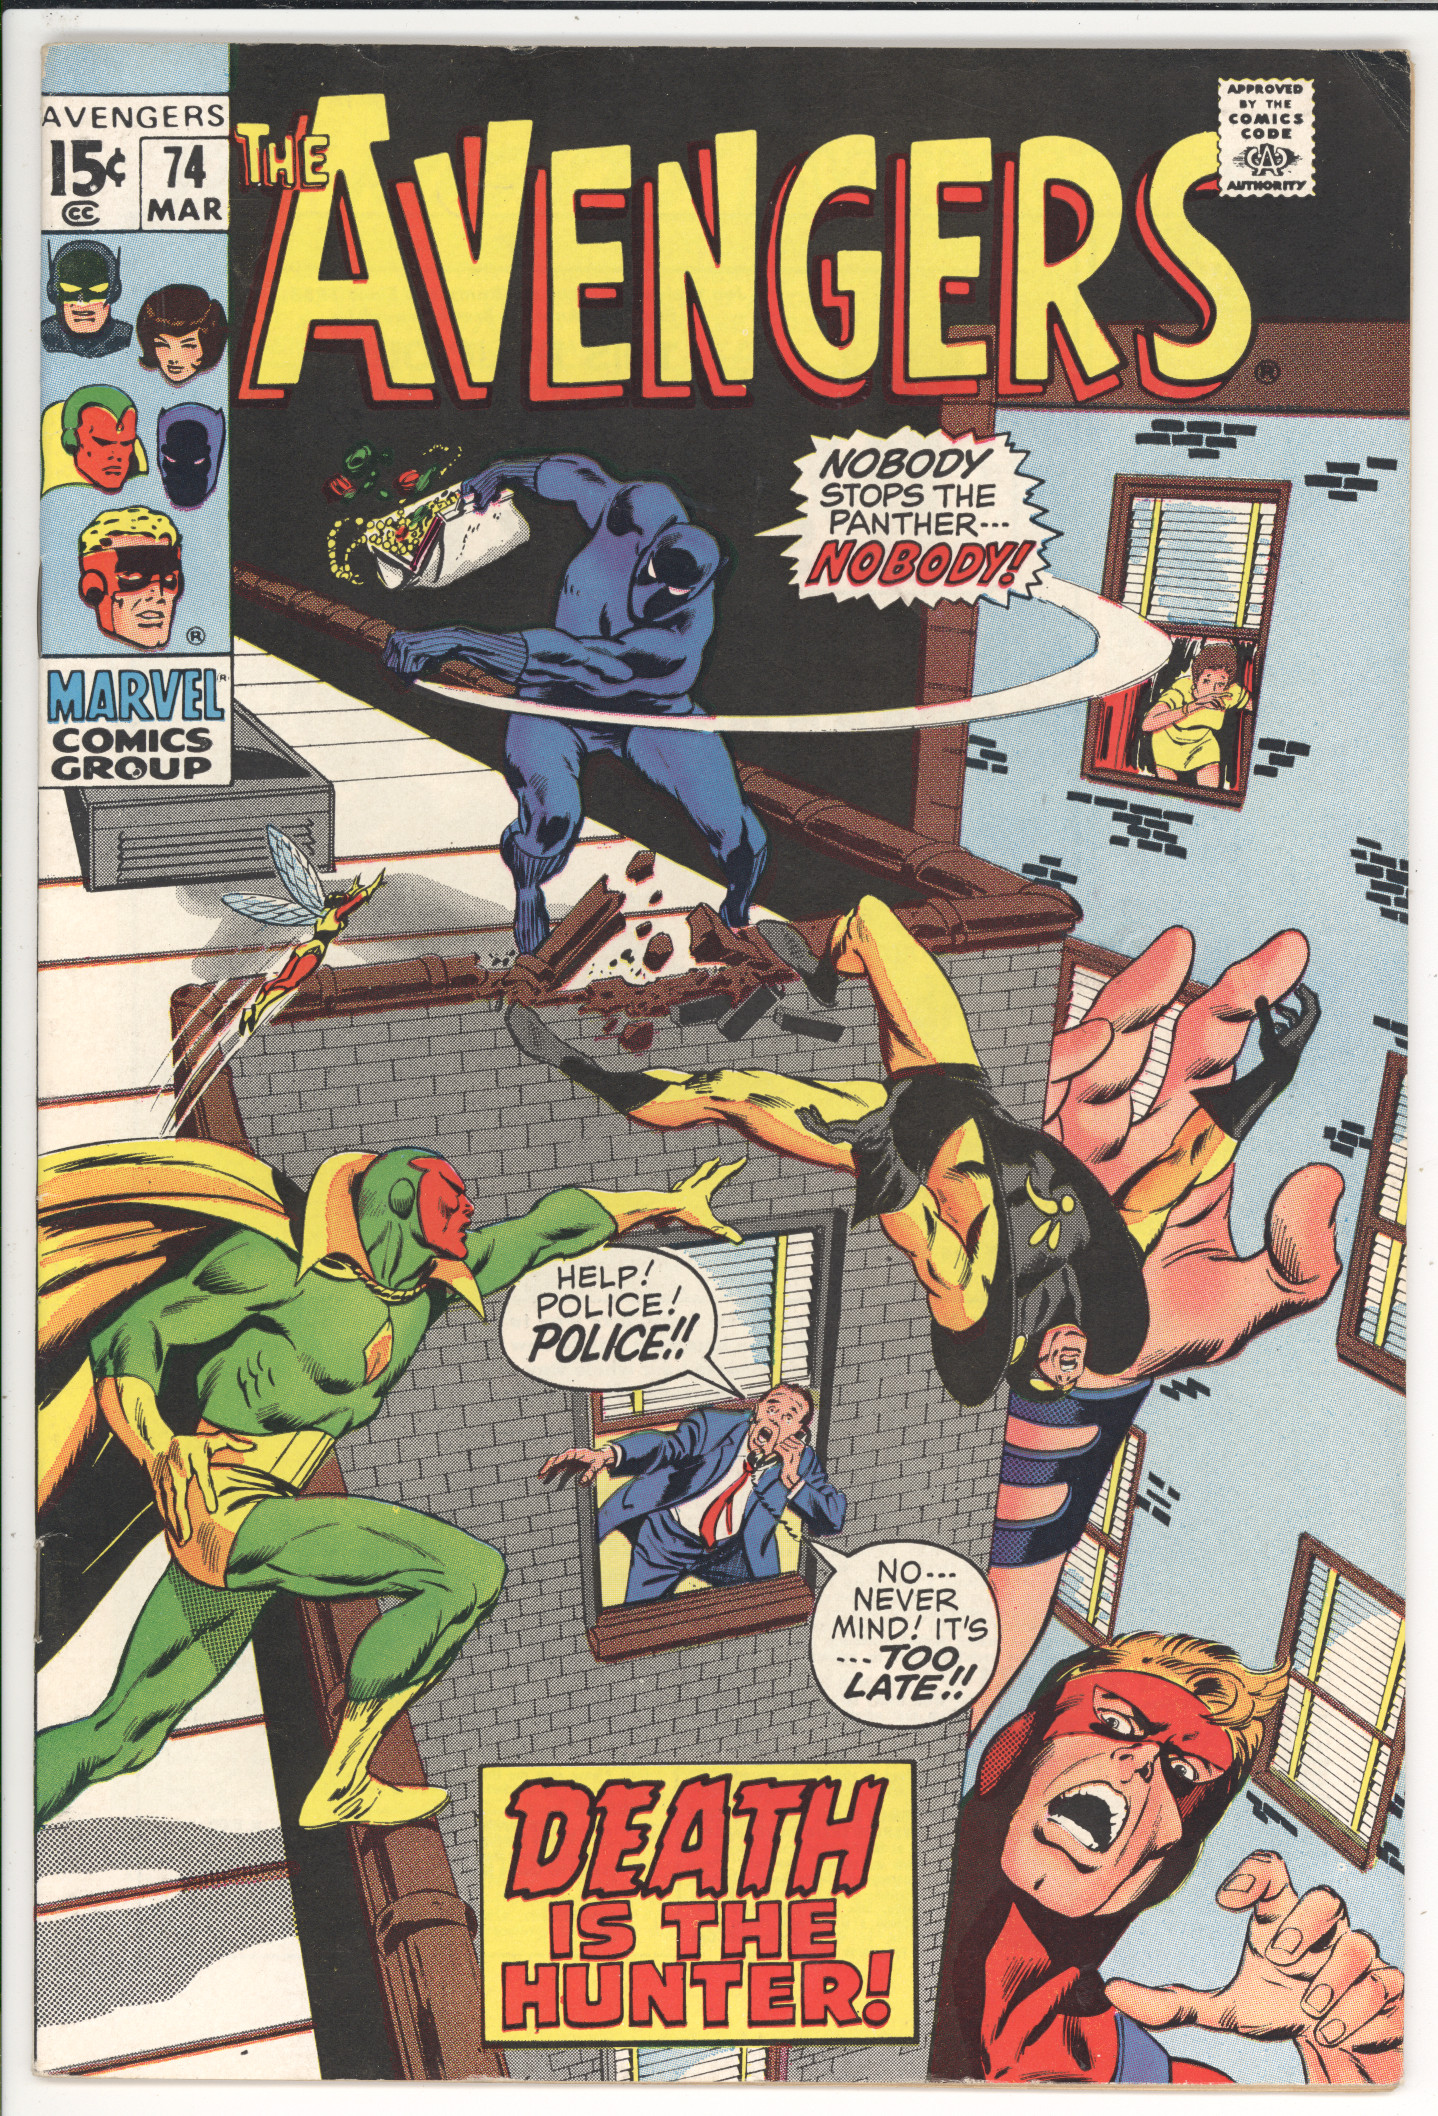 Avengers #74 front